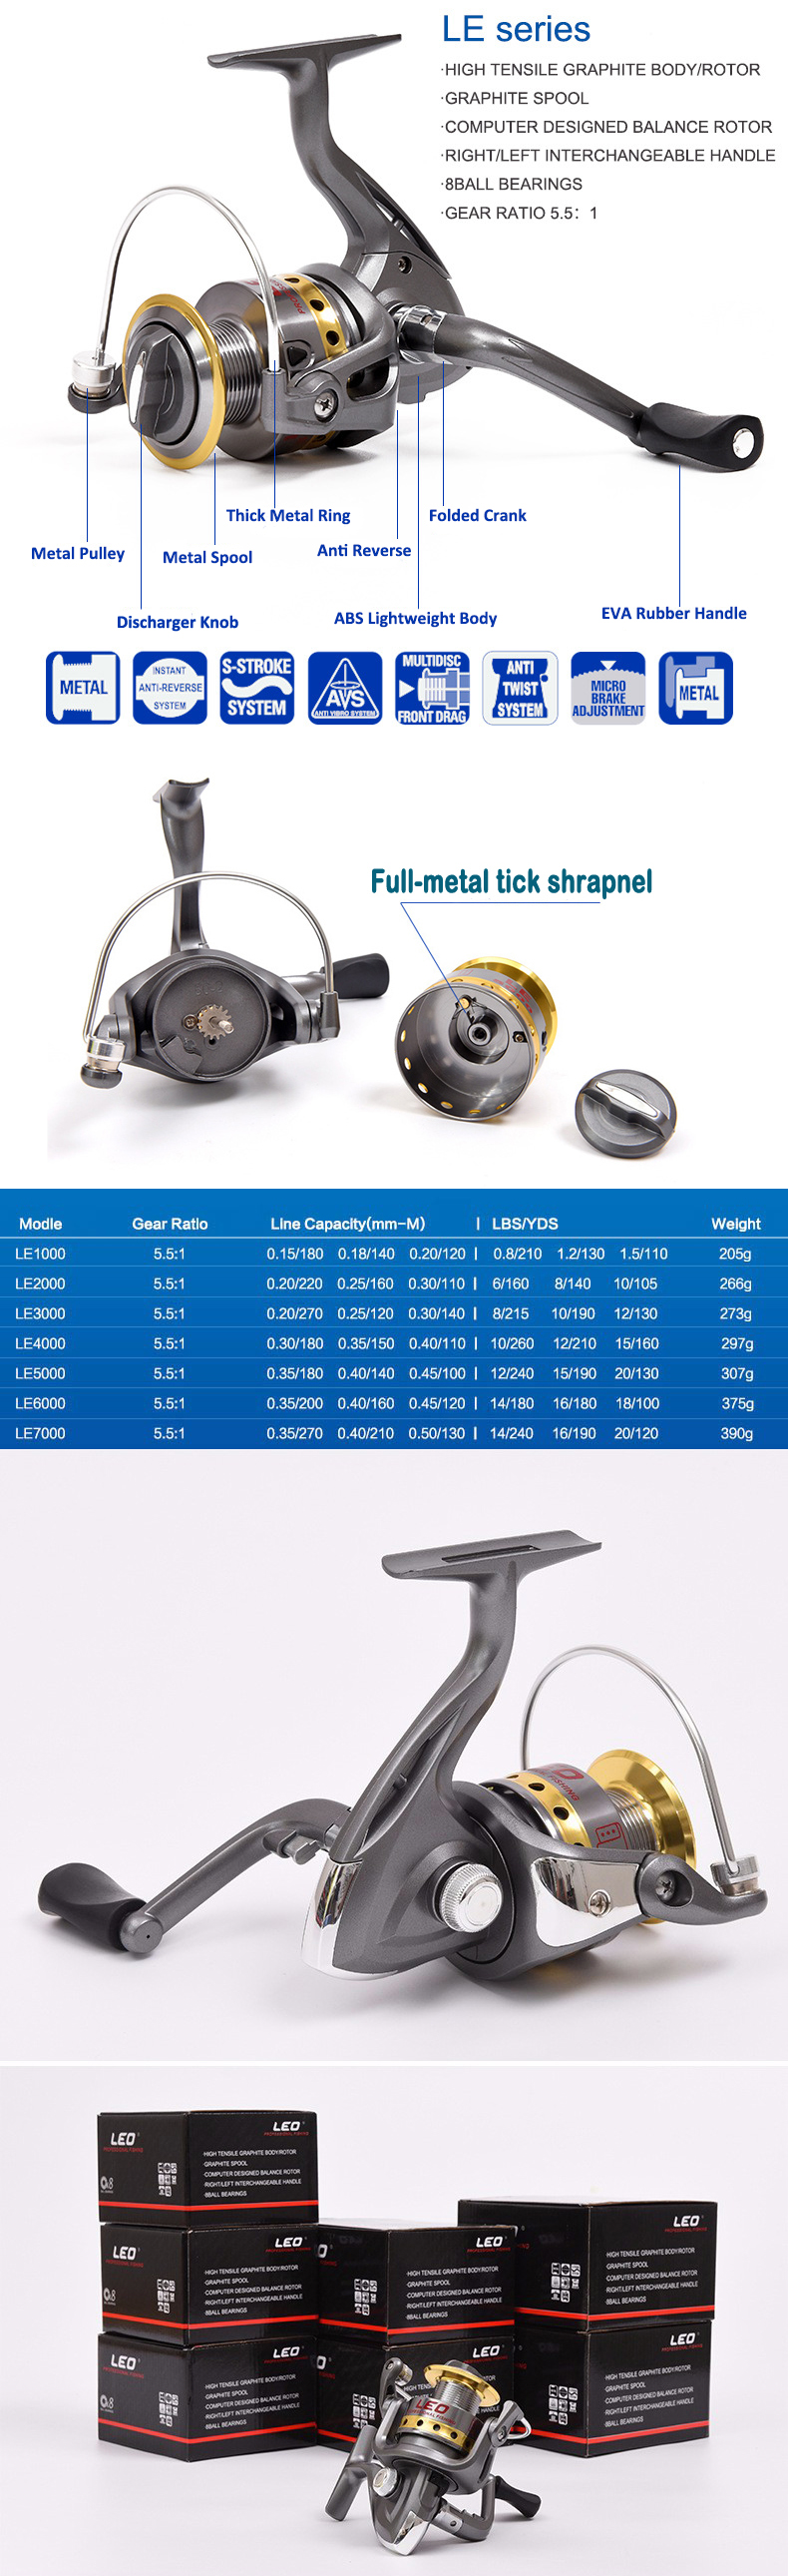 LEO-LE-Series-1000-7000-Metal-Spinning-Fishing-Reel-8-Ball-Bearings-551-Fishing-Tackle-1058860-2